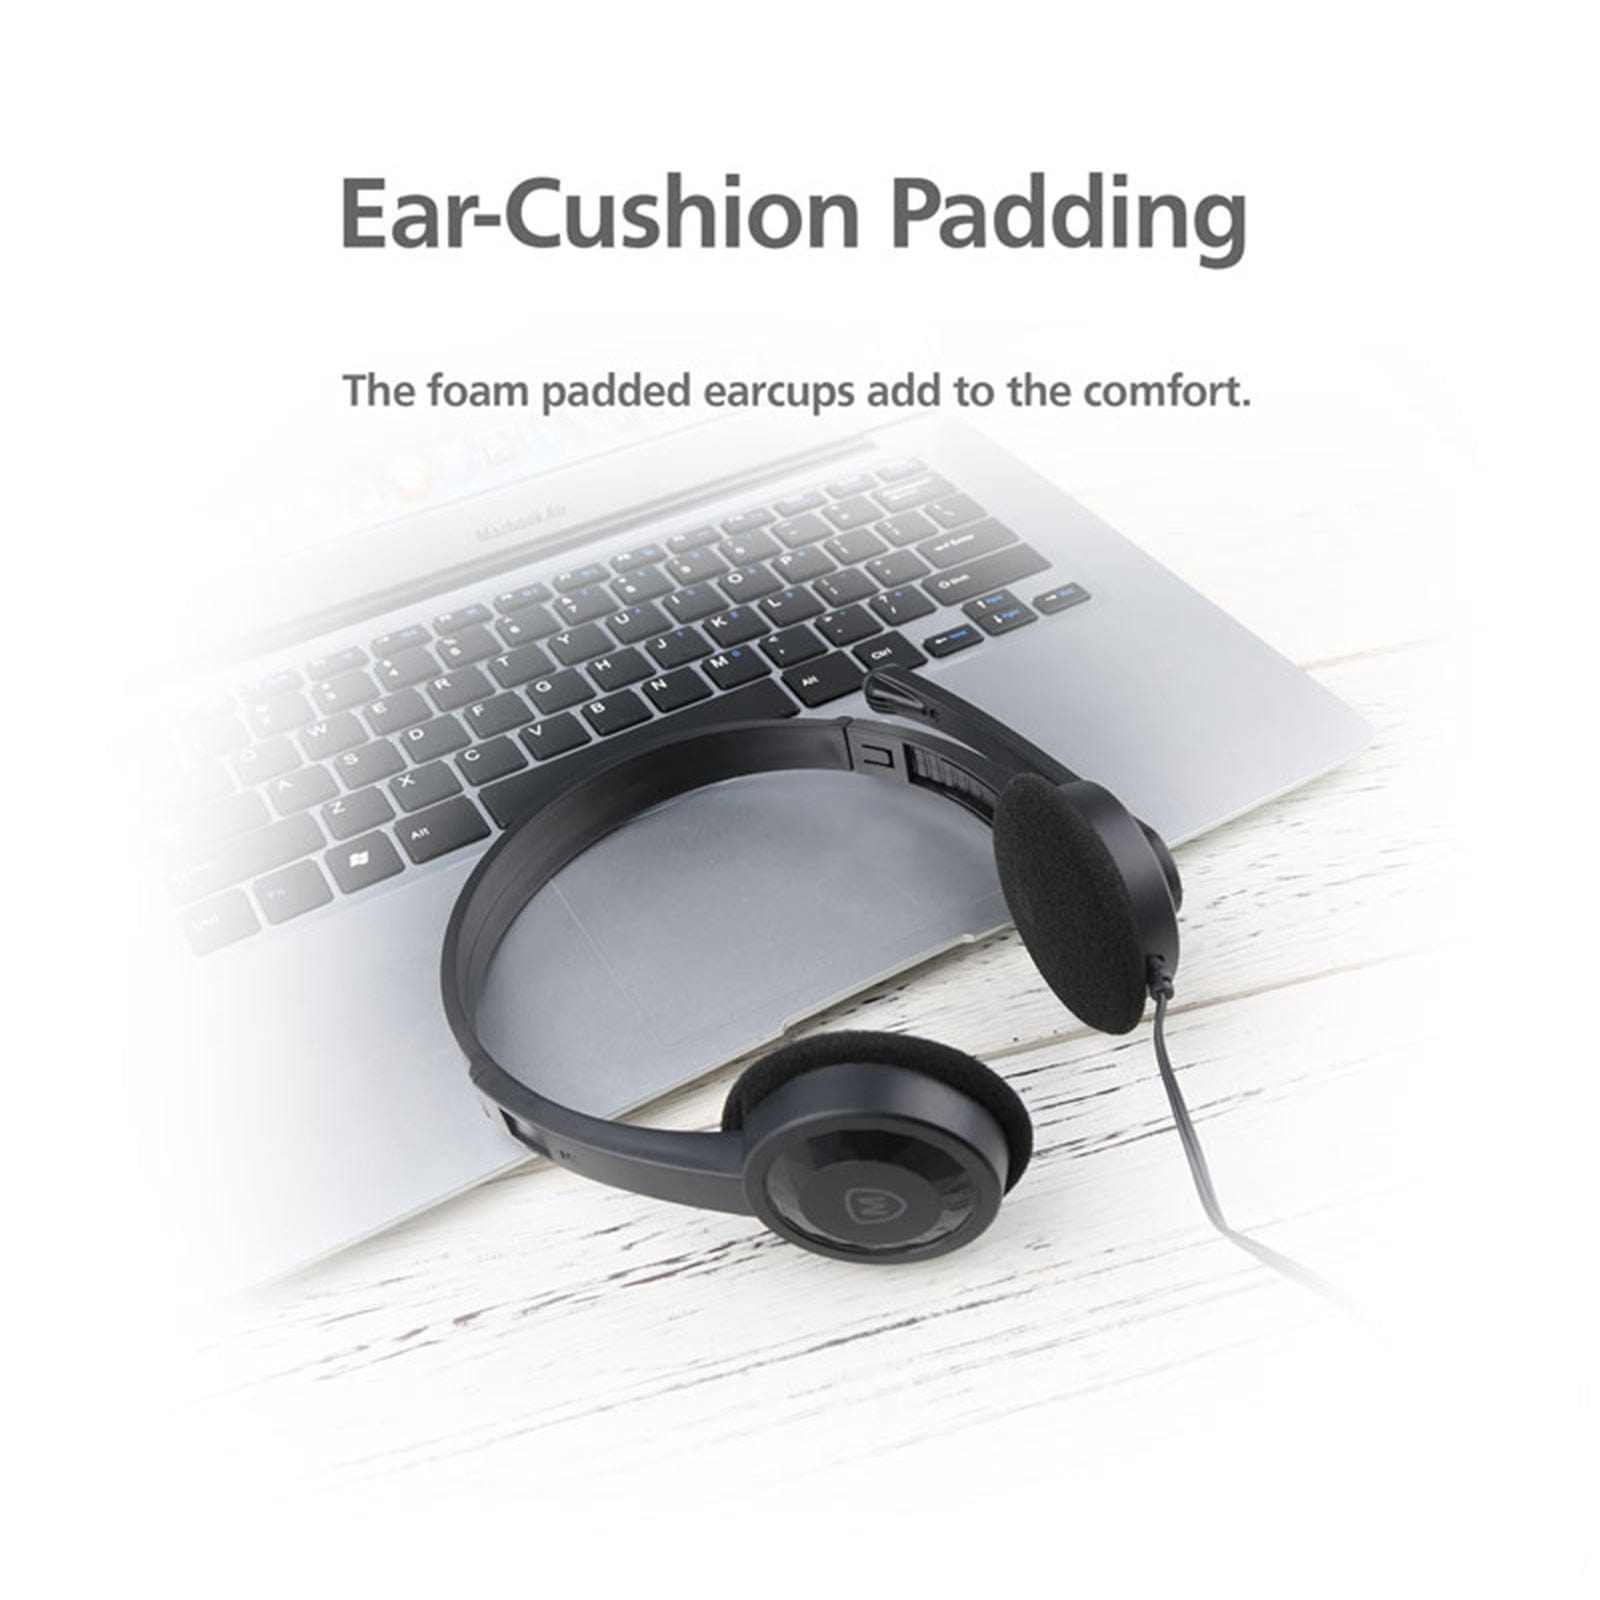 3.5mm Multi Device Stereo Headset Adjustable Headband Noiseless Volume Control